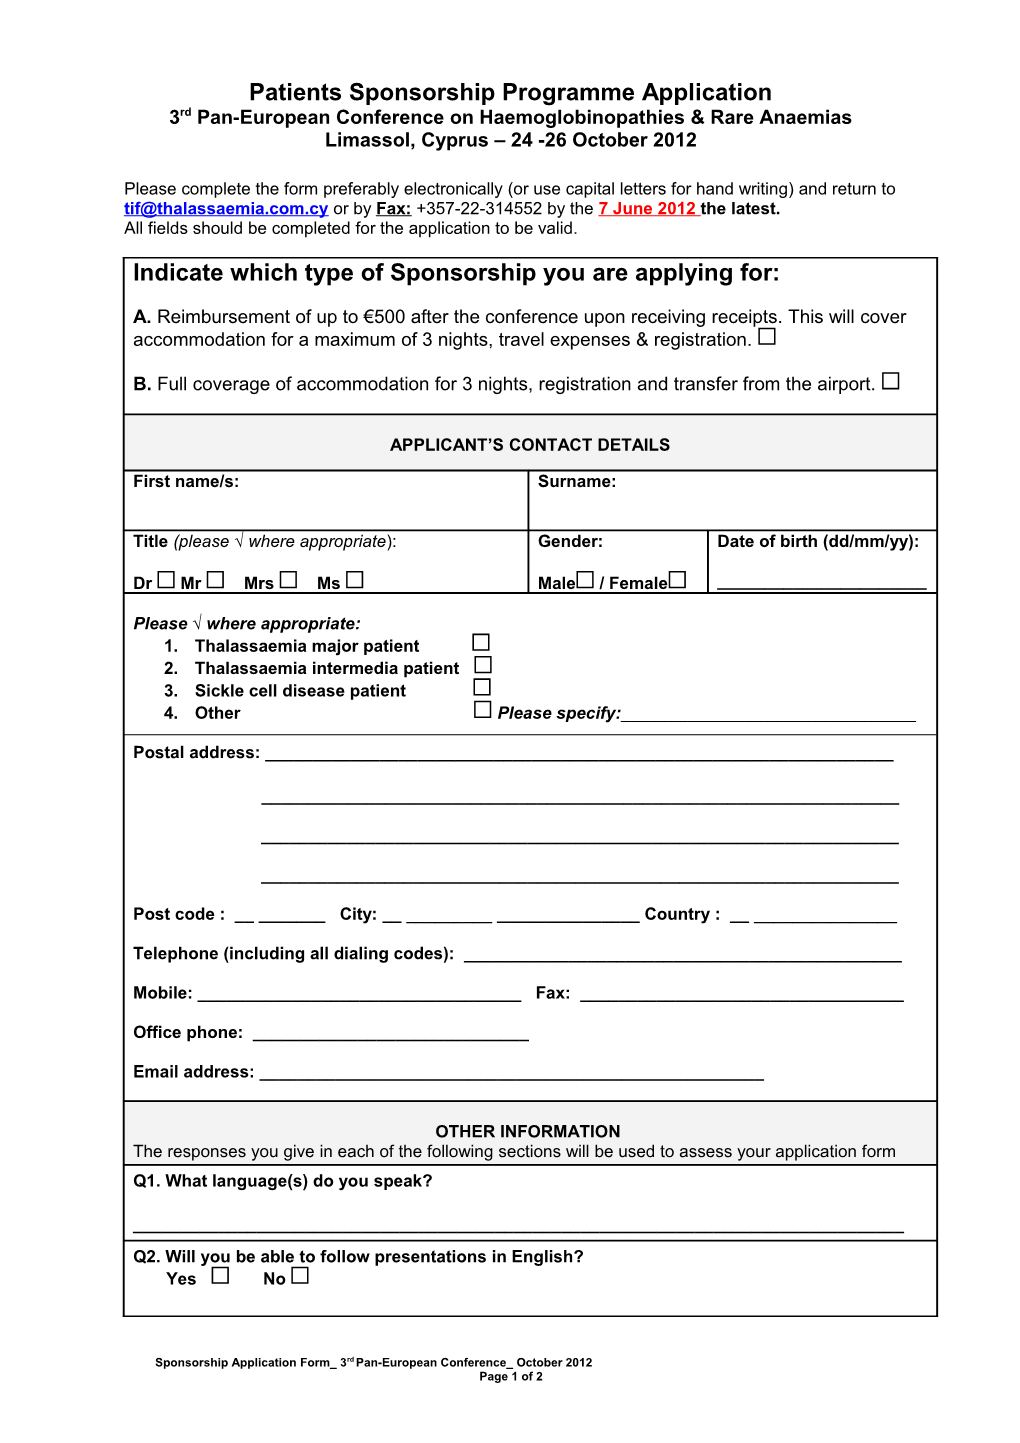 Sponsorship Application Form for Patients